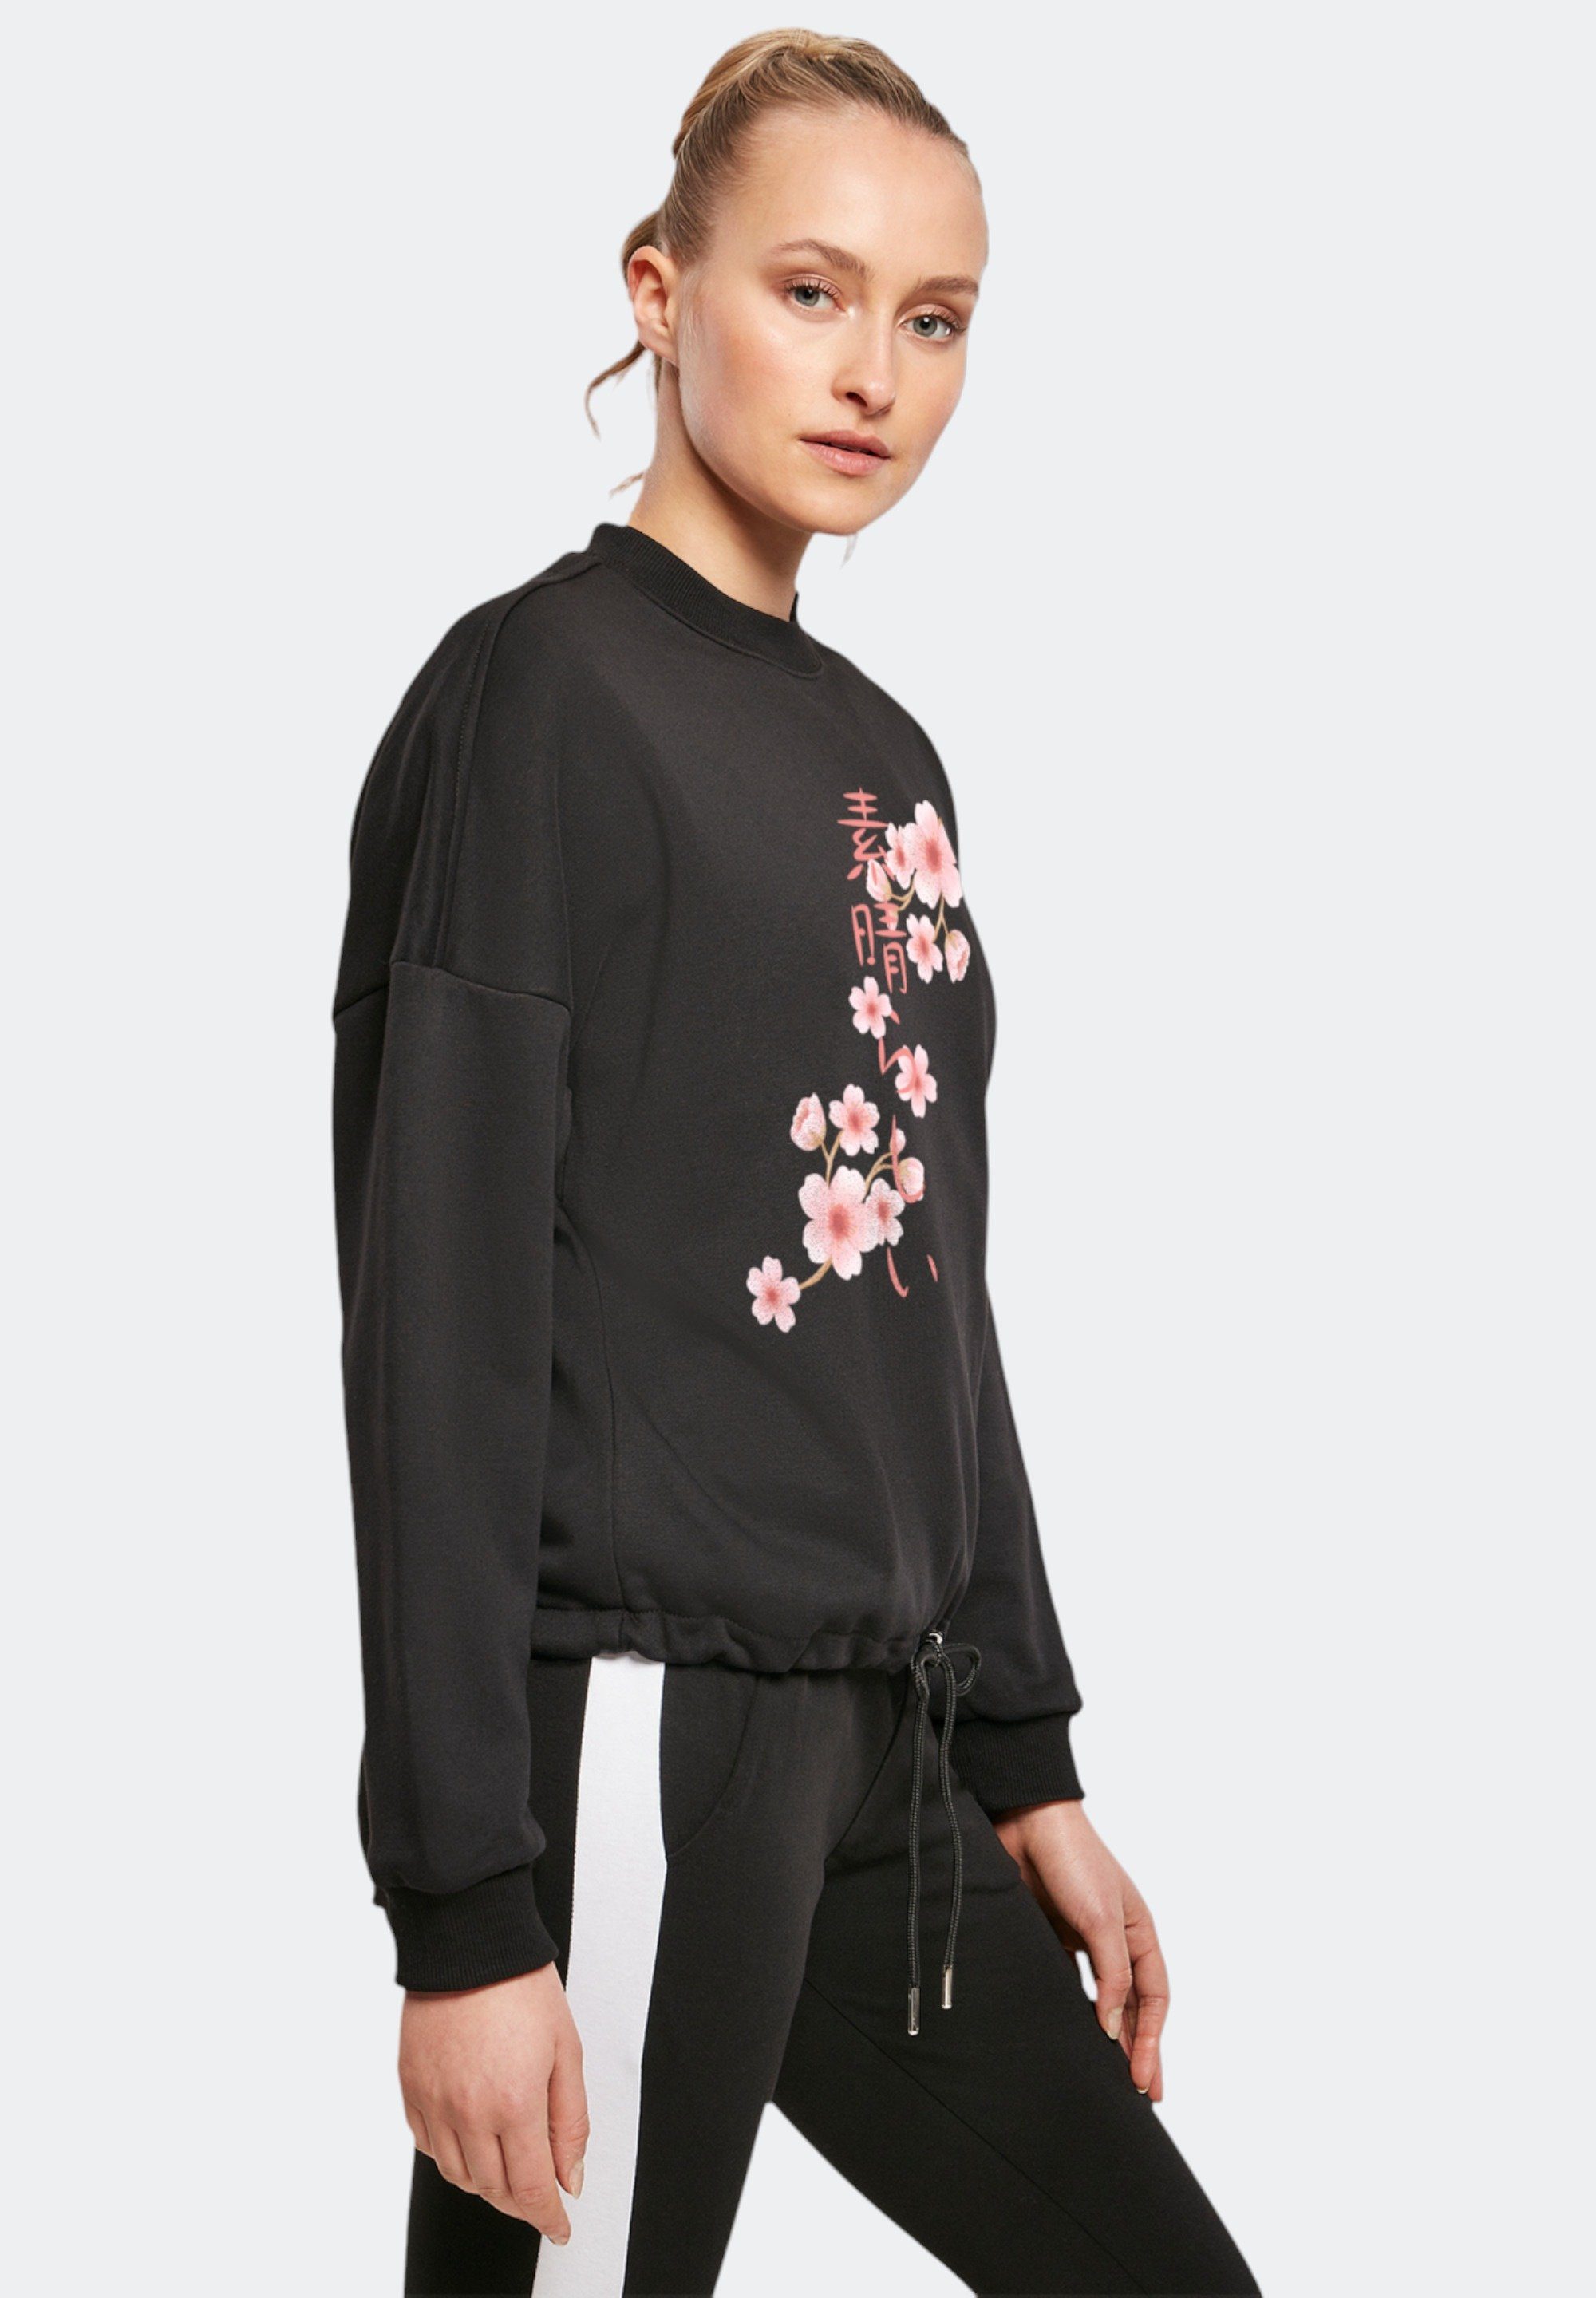 F4NT4STIC Sweatshirt Asien Print schwarz Kirschblüten